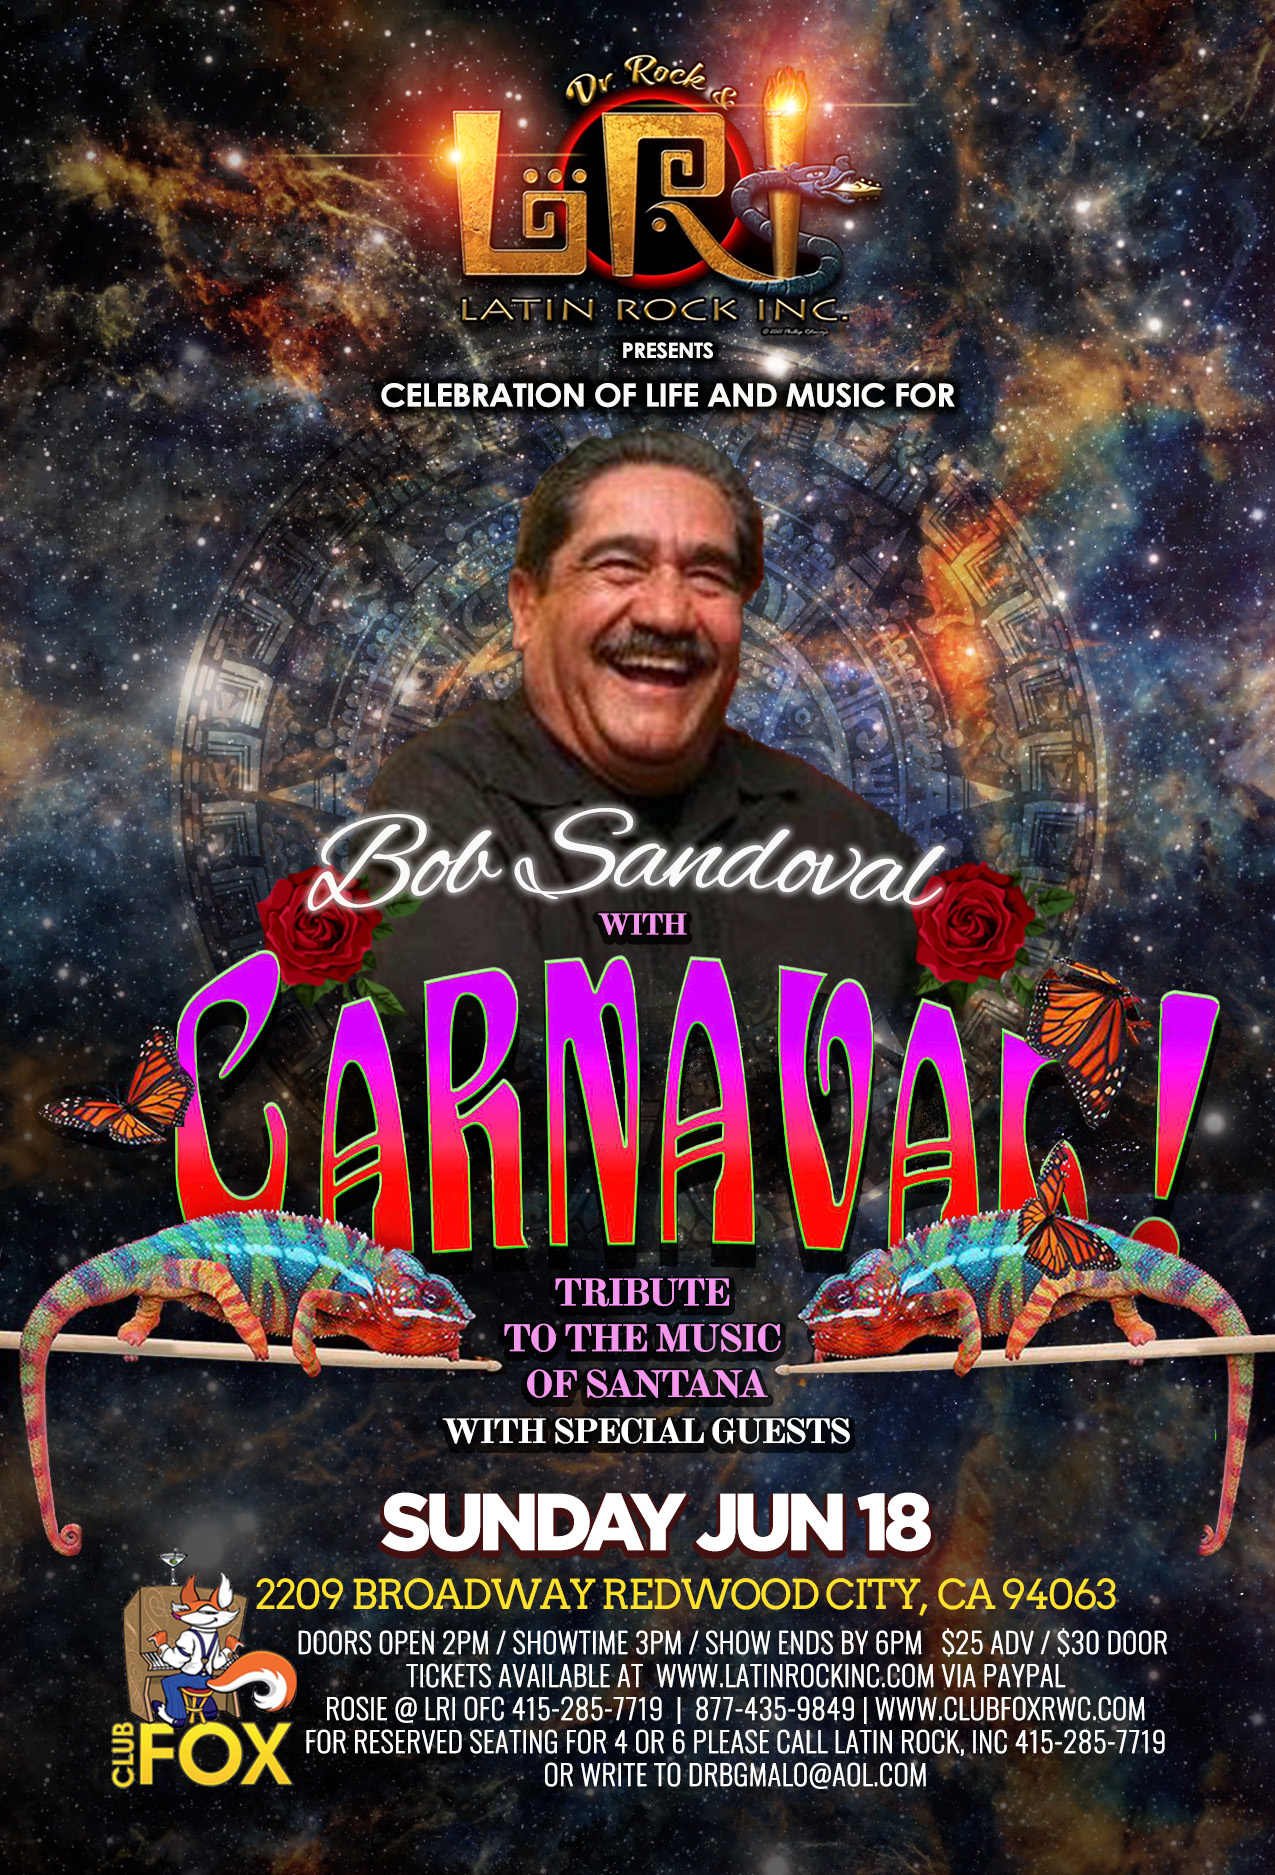 CARNAVAL, with Bob Sandoval